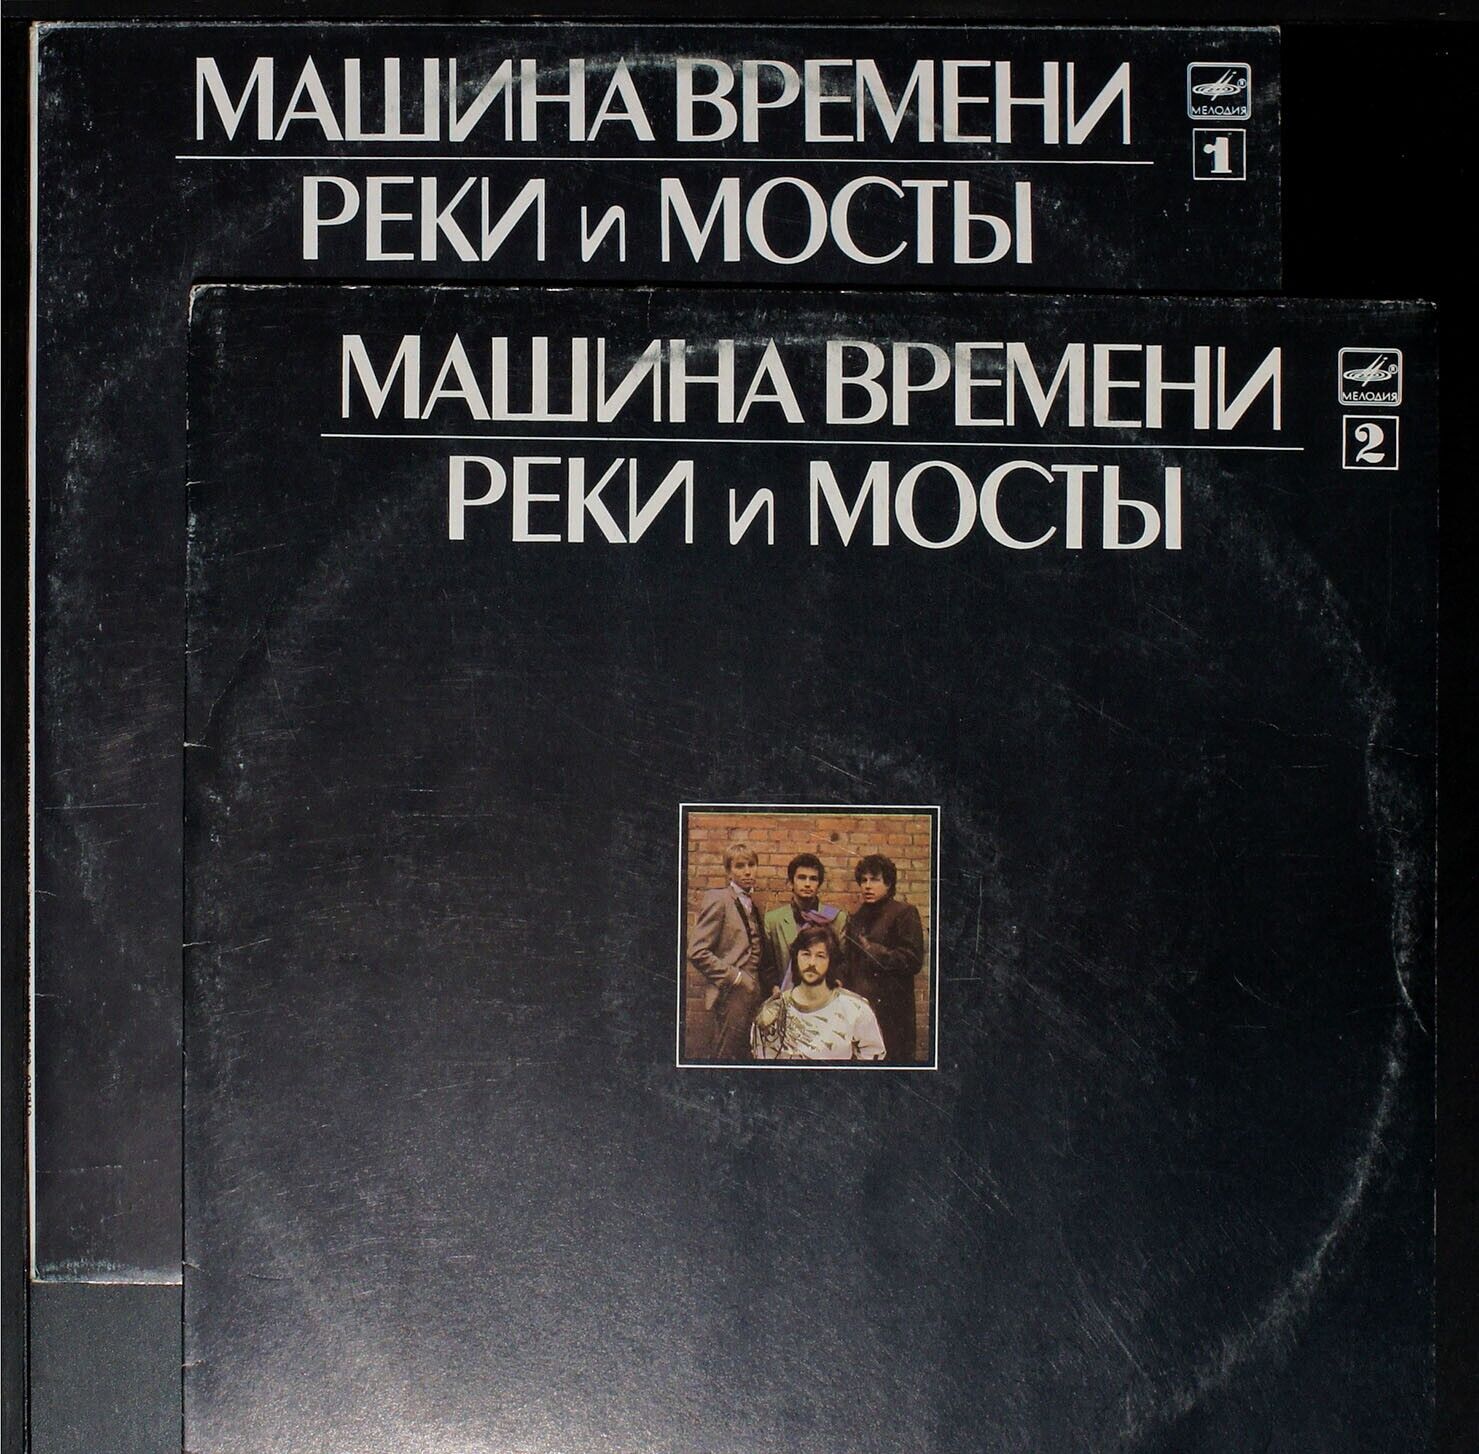 Mashina Vremeni - Машина Времени - Реки и Мосты 2xLP set USSR Melodiya US seller